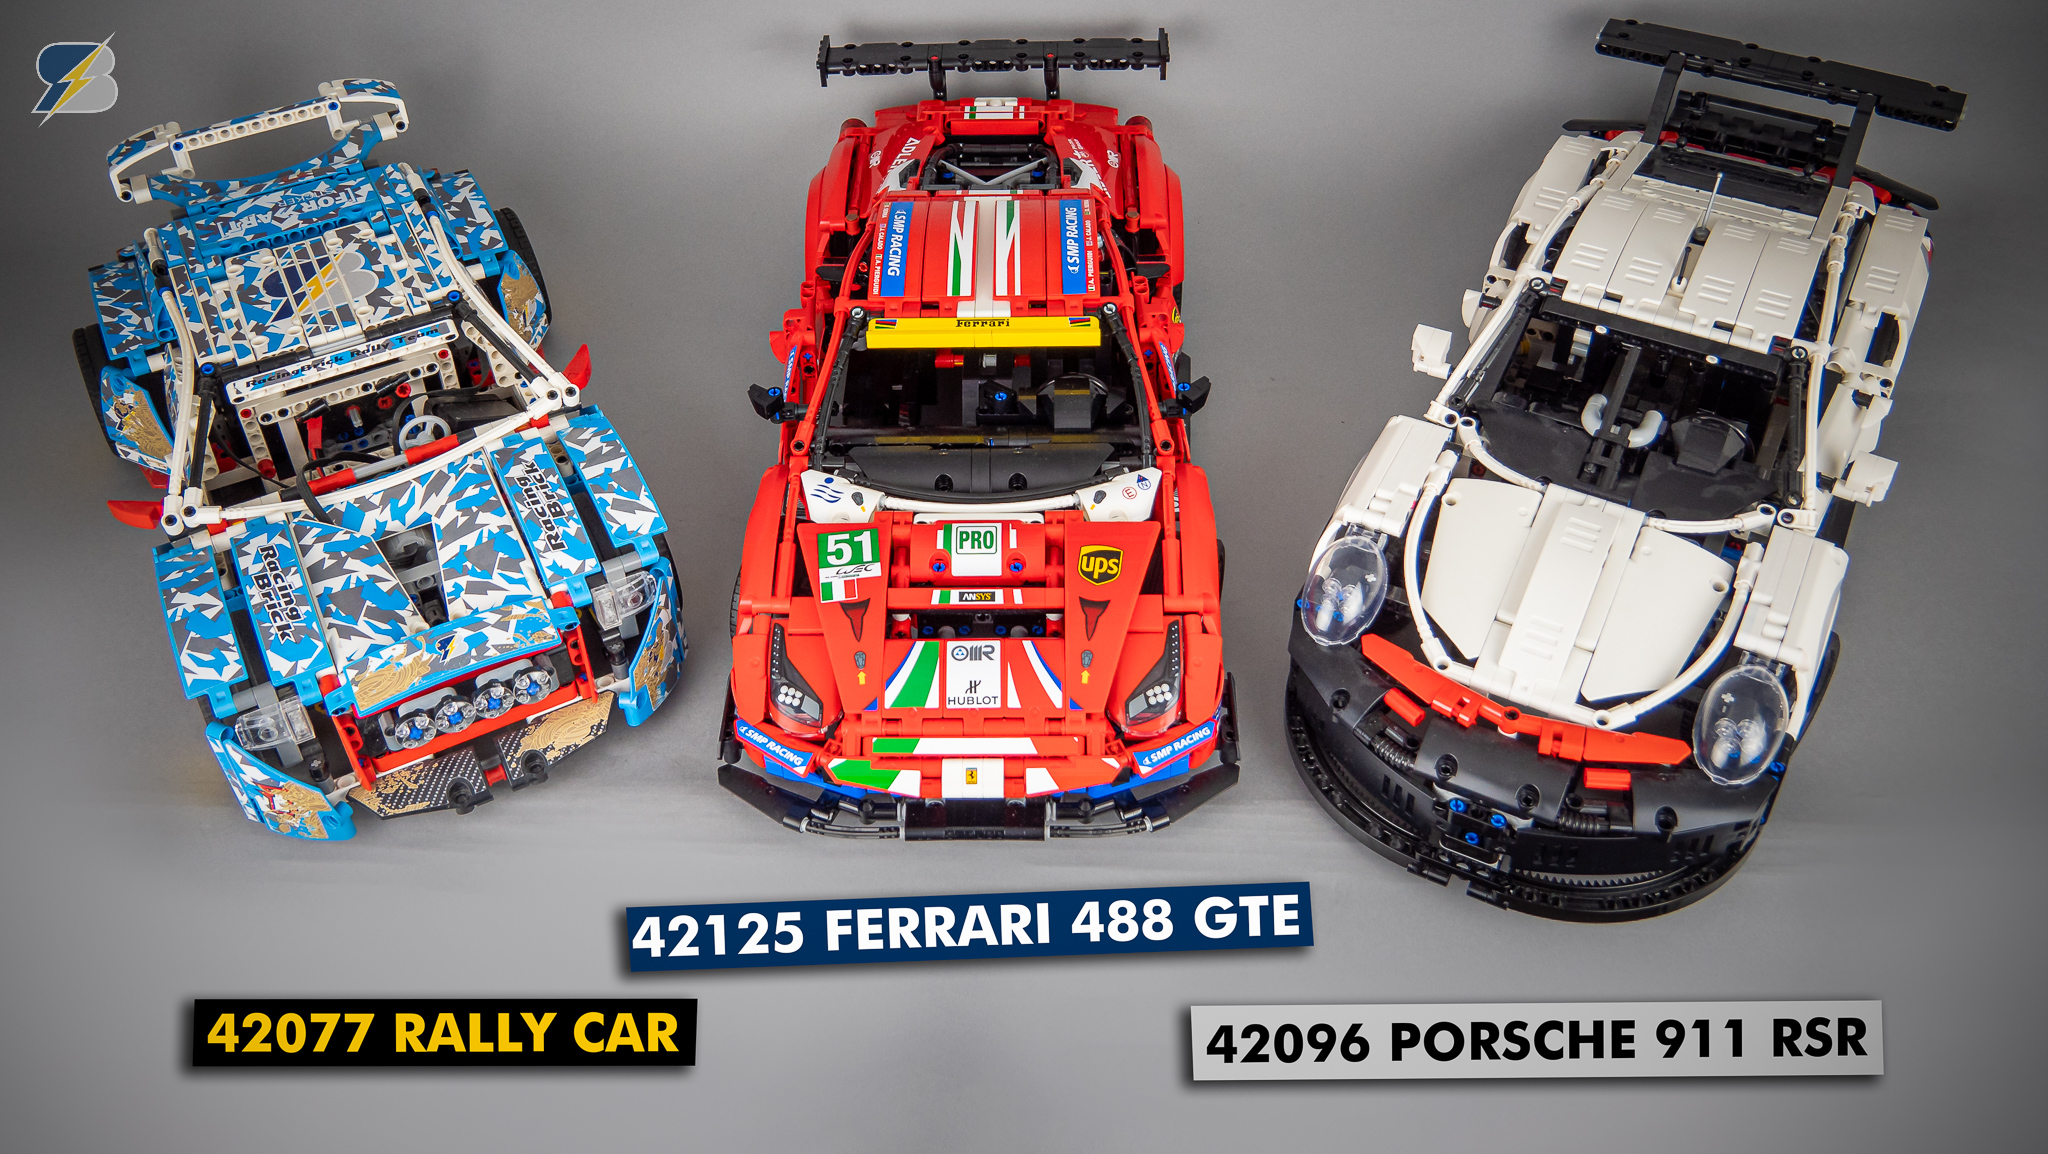 RacingBrick on X: The LEGO Technic 42125 Ferrari 488 GTE is the